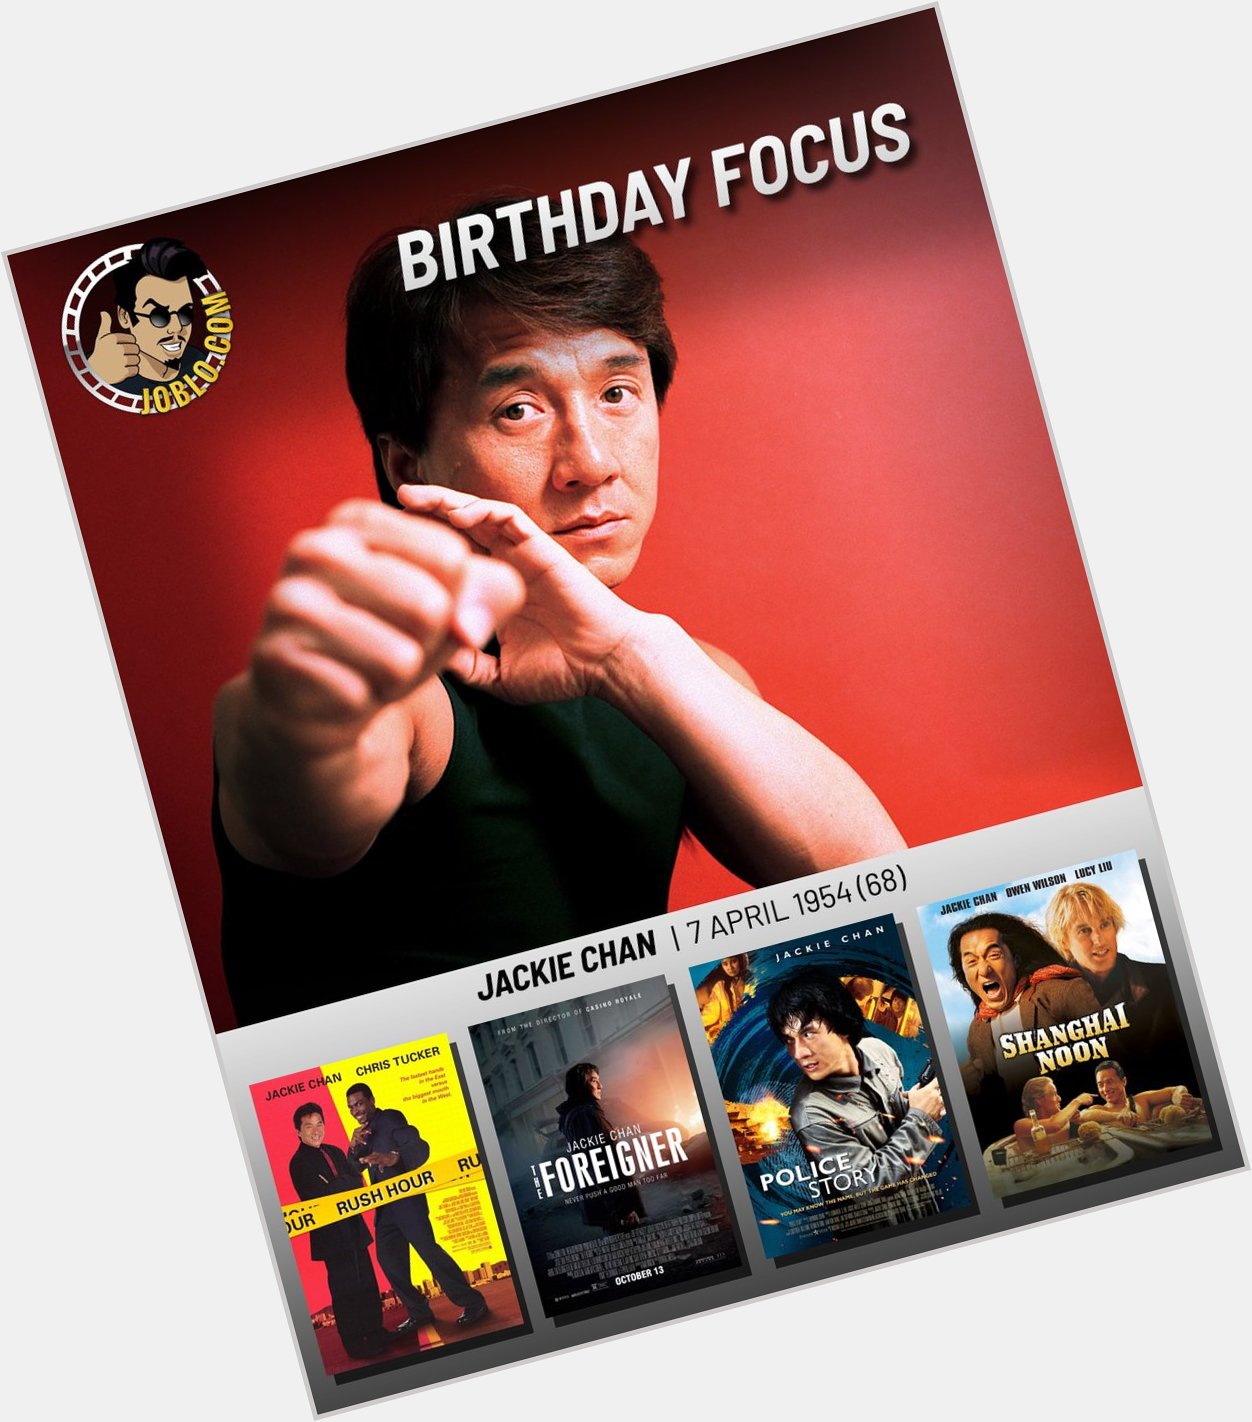 Happy birthday Jackie Chan! 